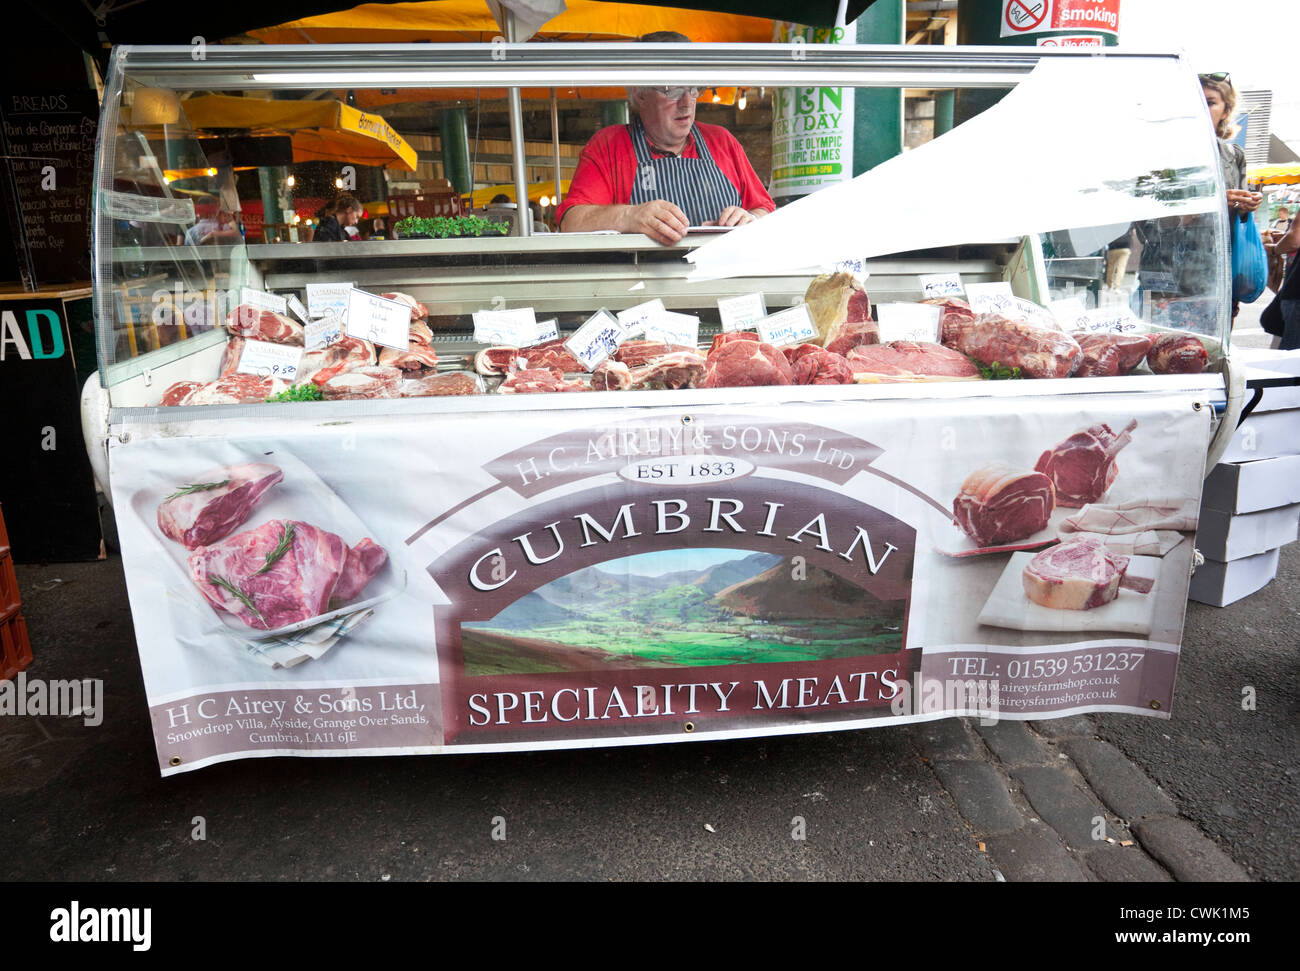 Cumbrian Speciality Meats fridge in Borough Market, London, England, UK Stock Photo